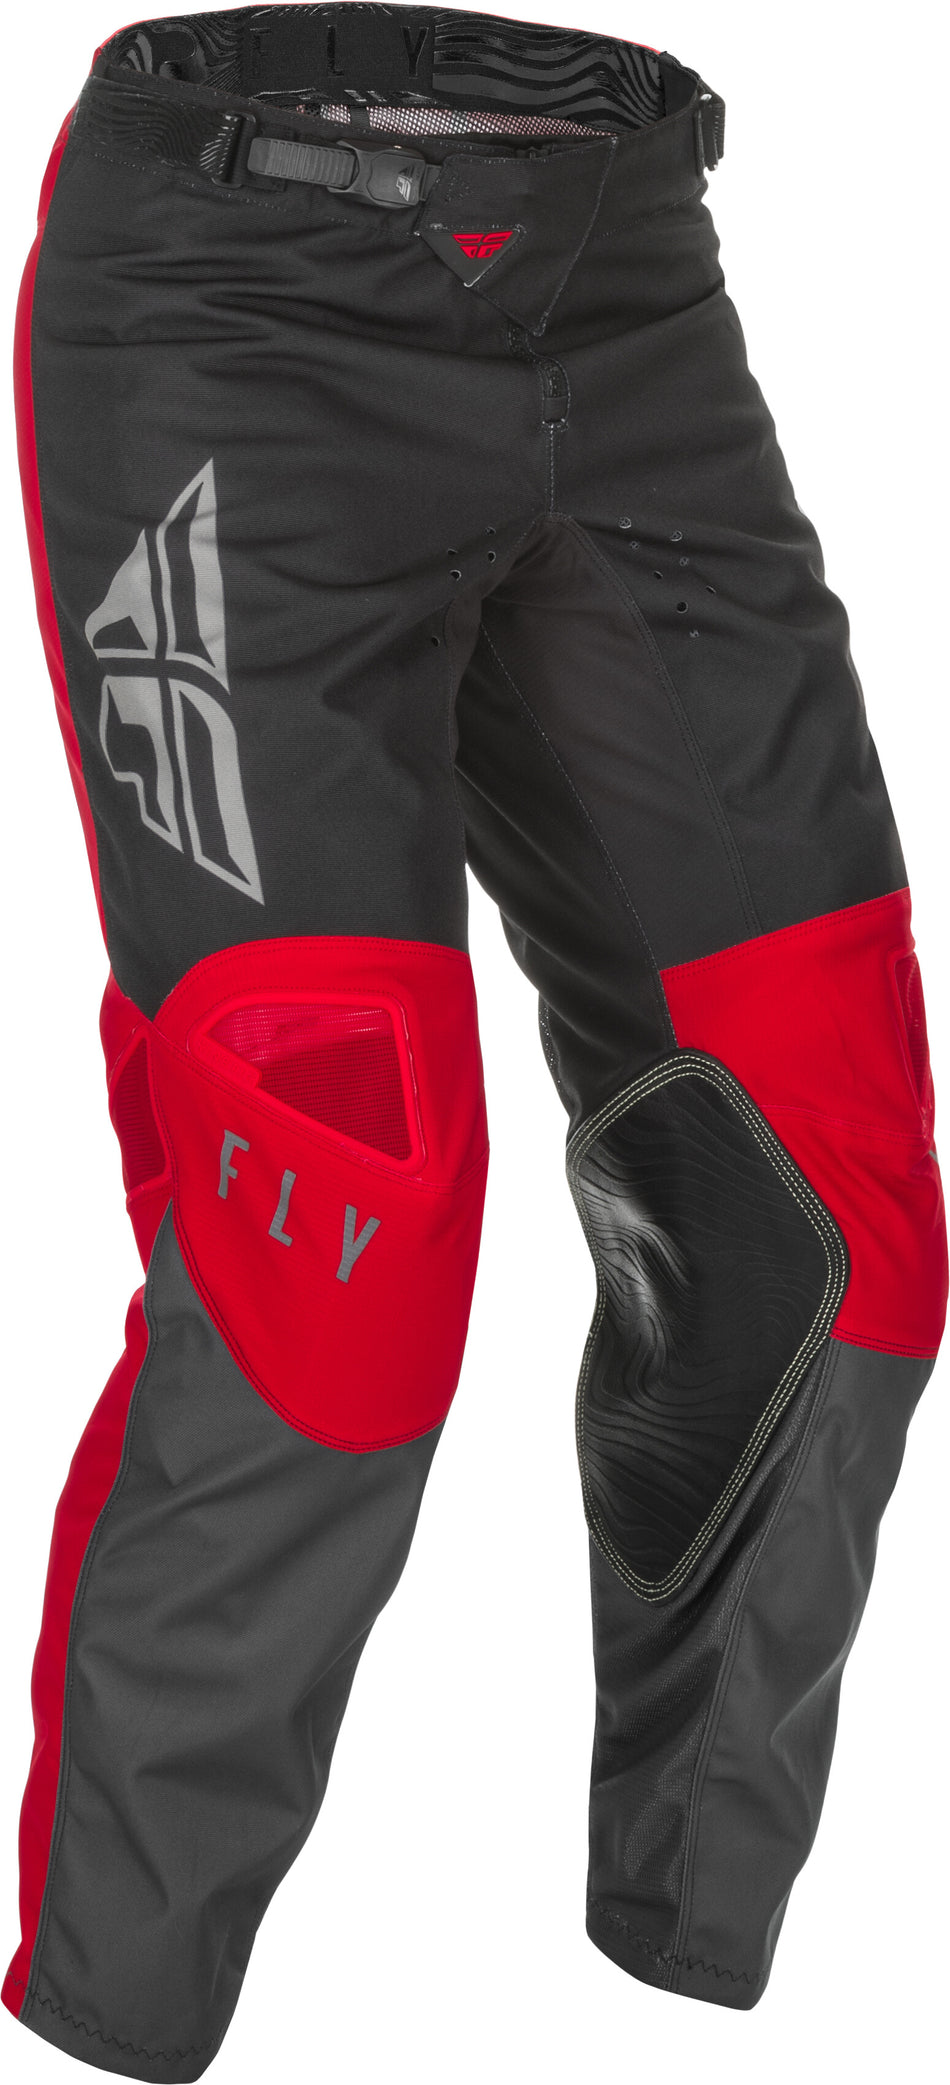 FLY RACING Kinetic K121 Pants Red/Grey/Black Sz 36 374-43236